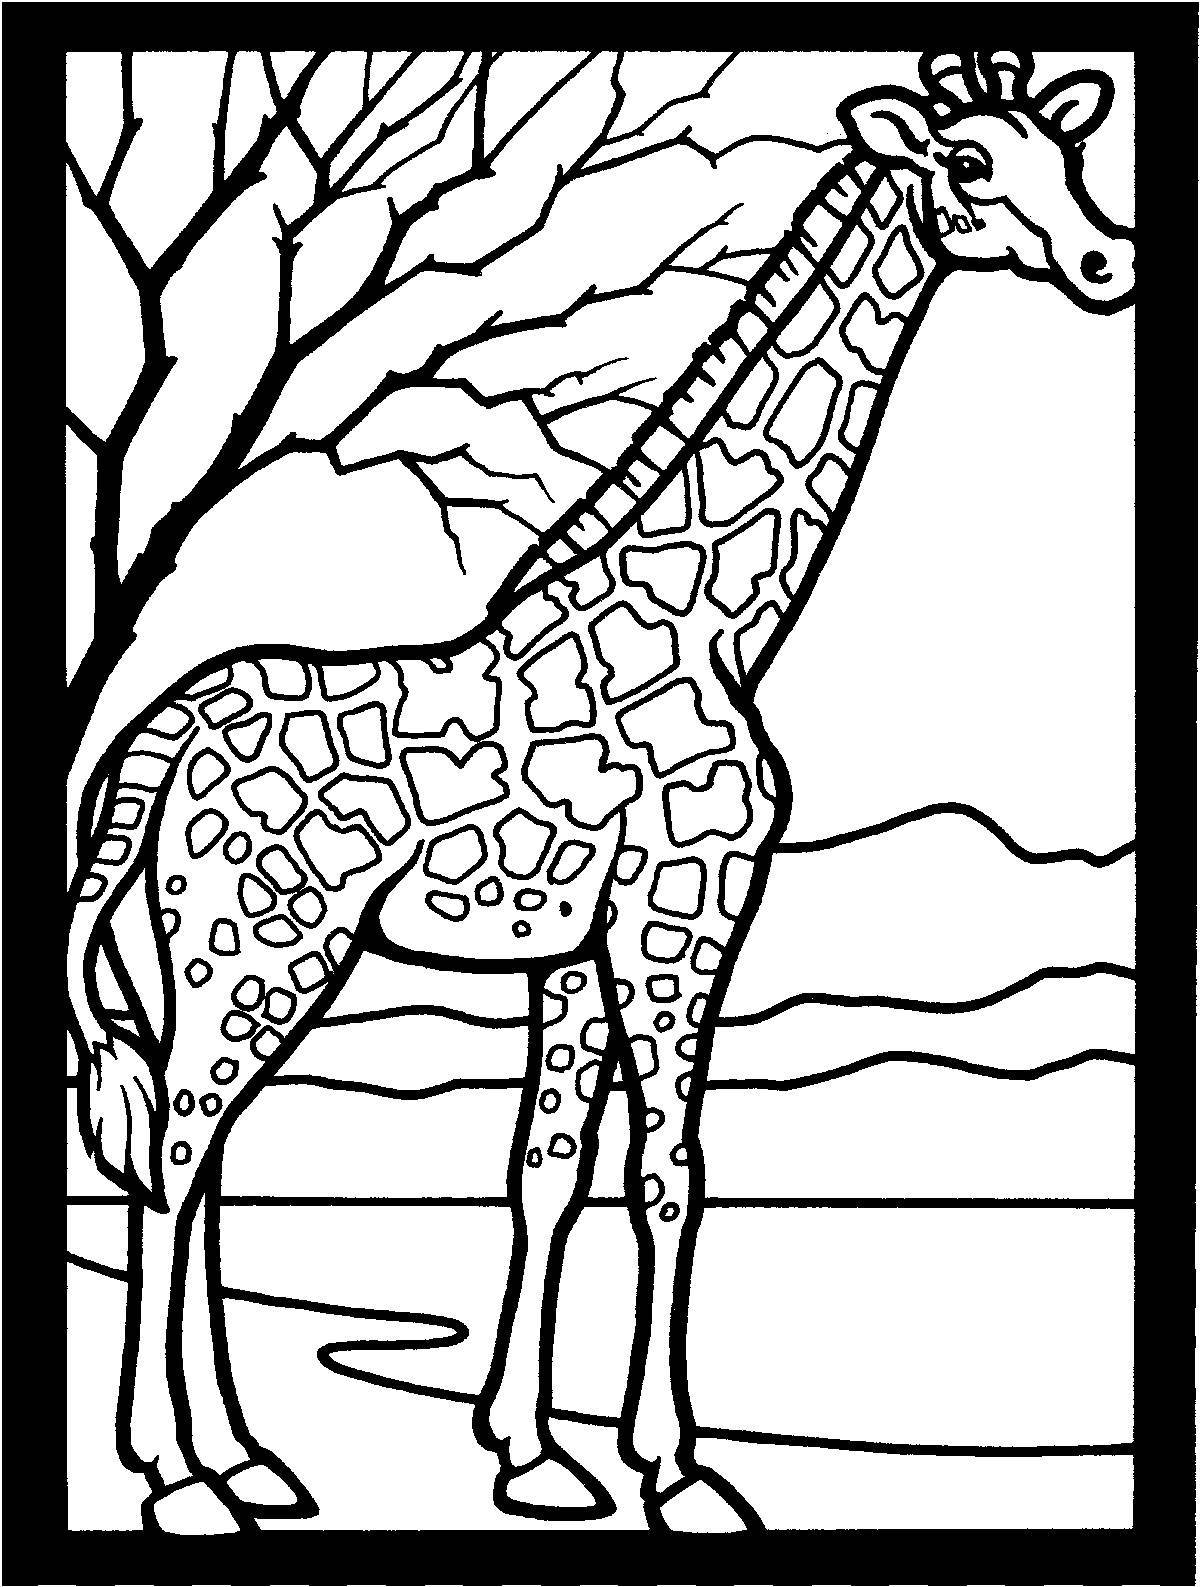 Fun giraffe coloring book for kids